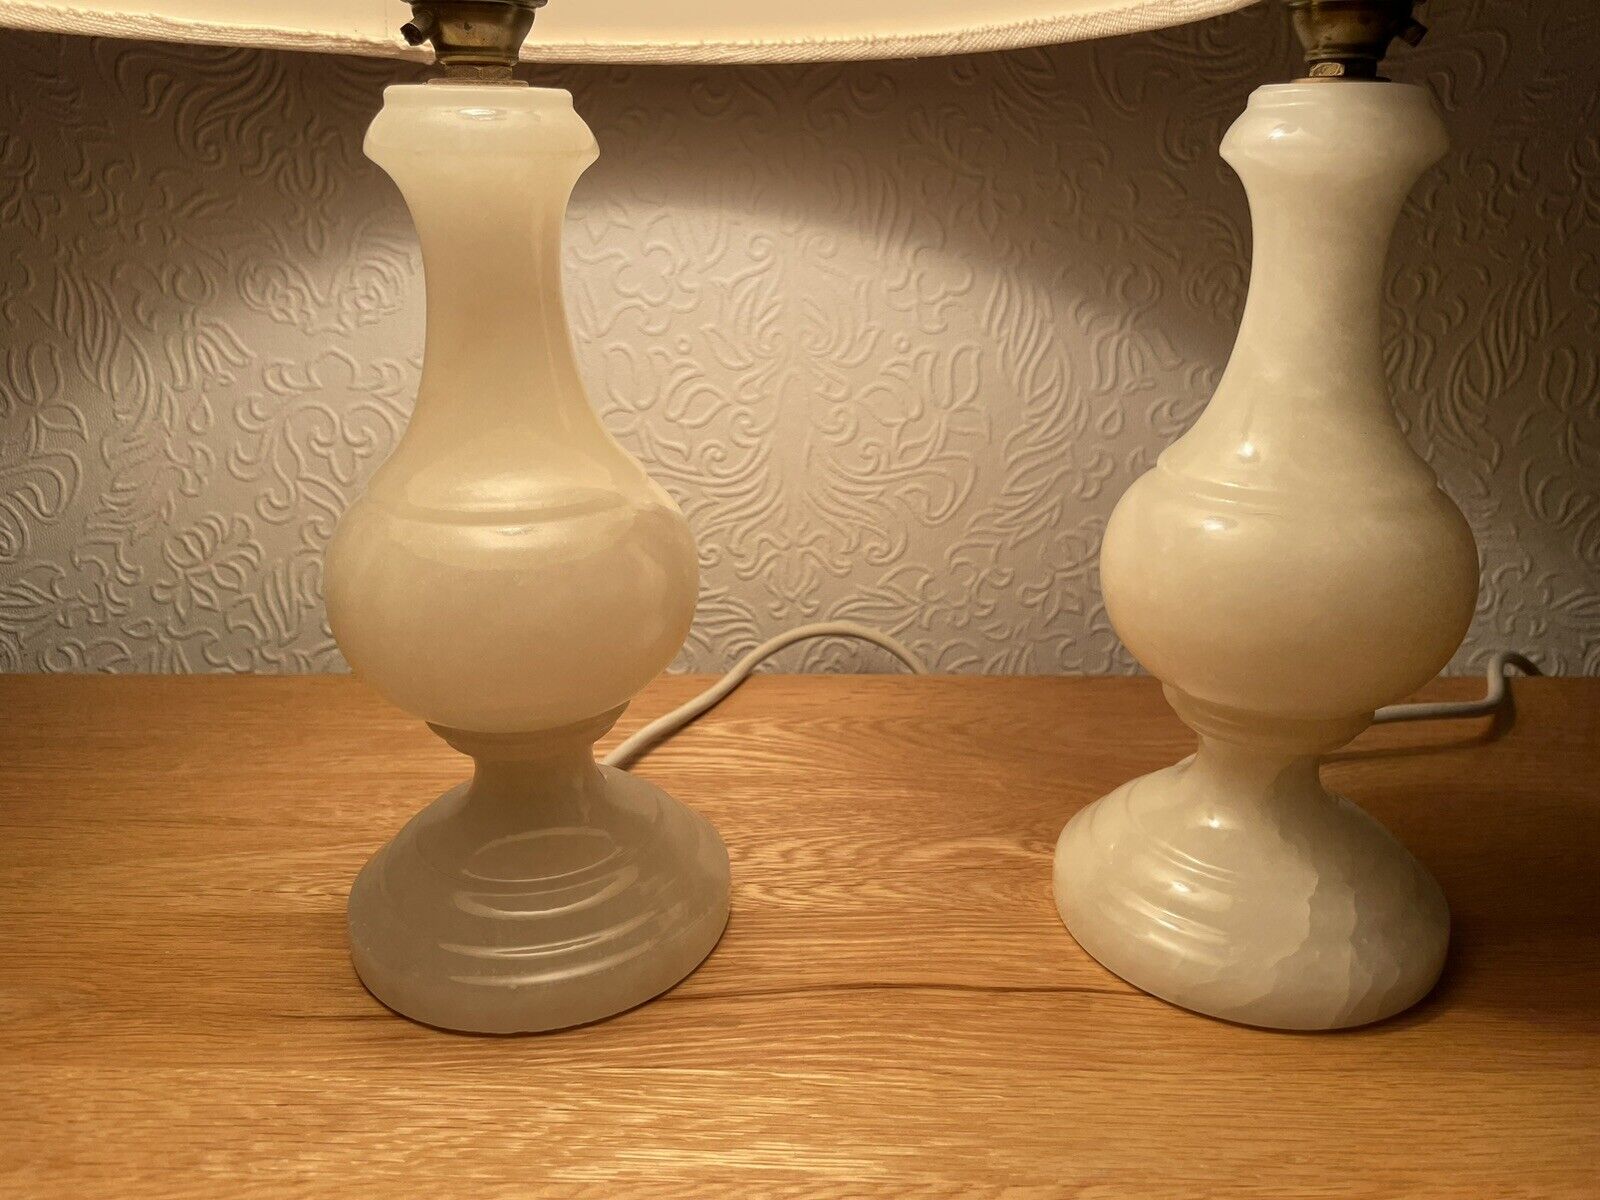 Jonathan Perant Pair of Oynx Marble Lamps Home Decor Lighting